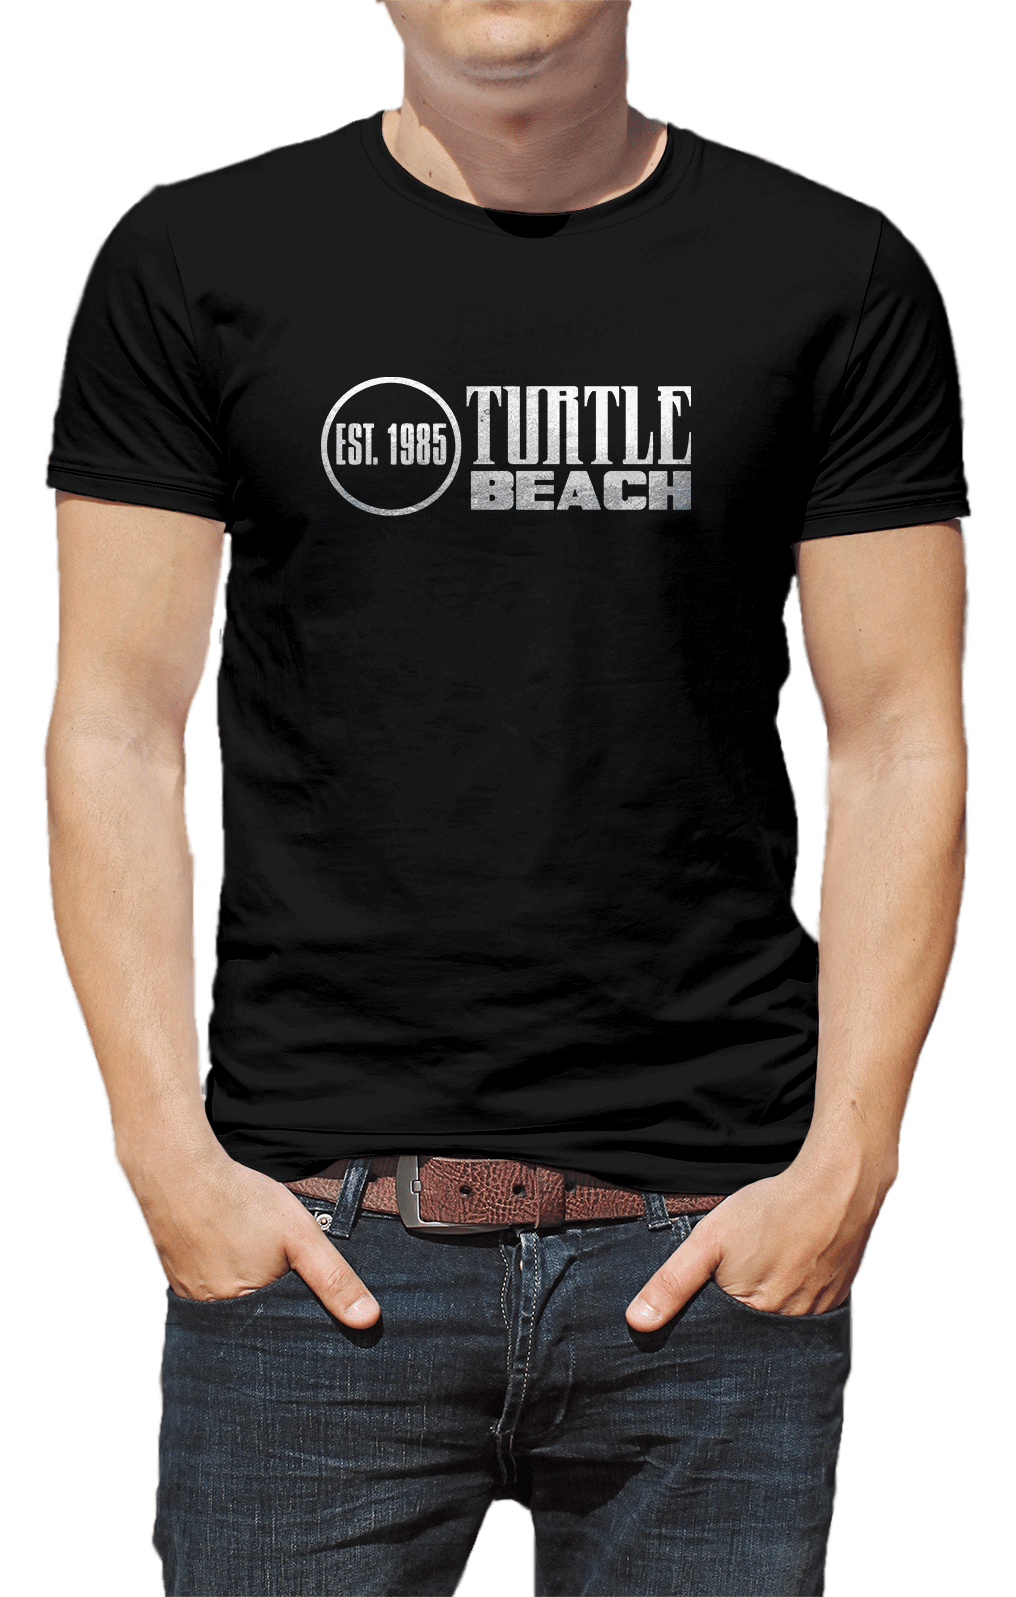 Black Turtle Beach Clothing est. 1985 crewneck t-shirt. Canadian Made 80% organic cotton. Help us save our lakes Kenora